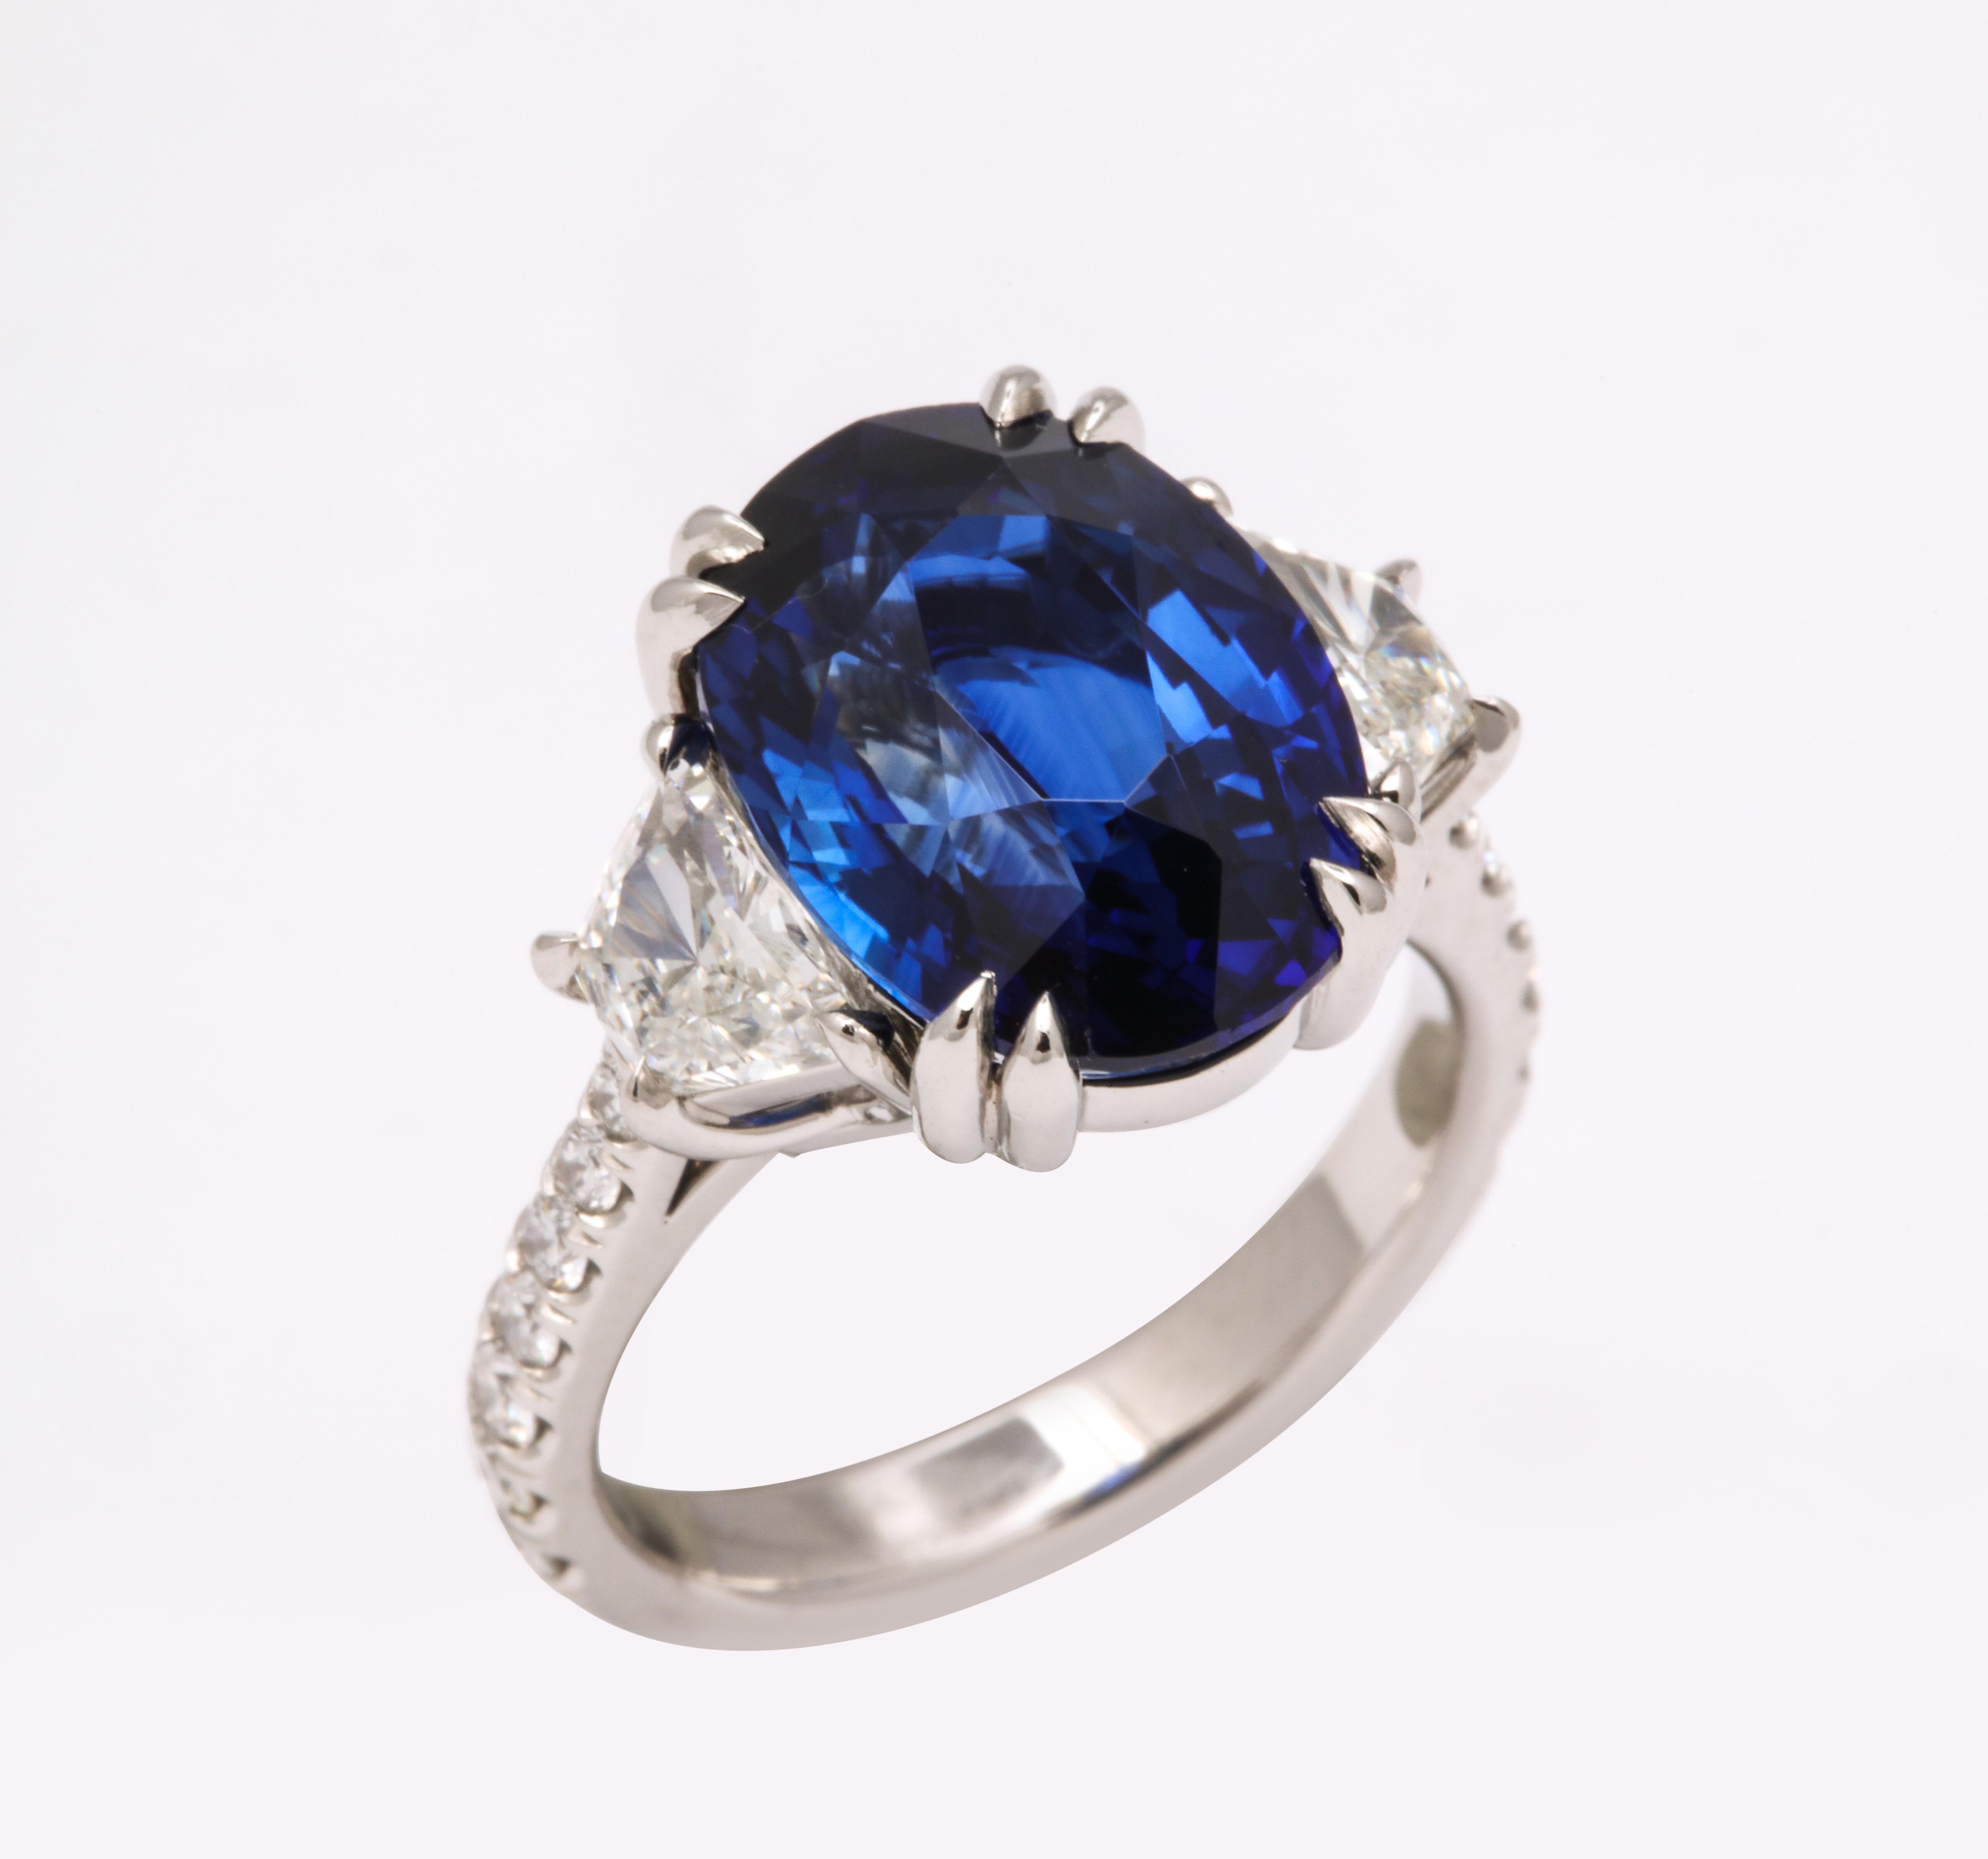 Oval Cut 8 Carat Vivid Blue Sapphire and Diamond Ring